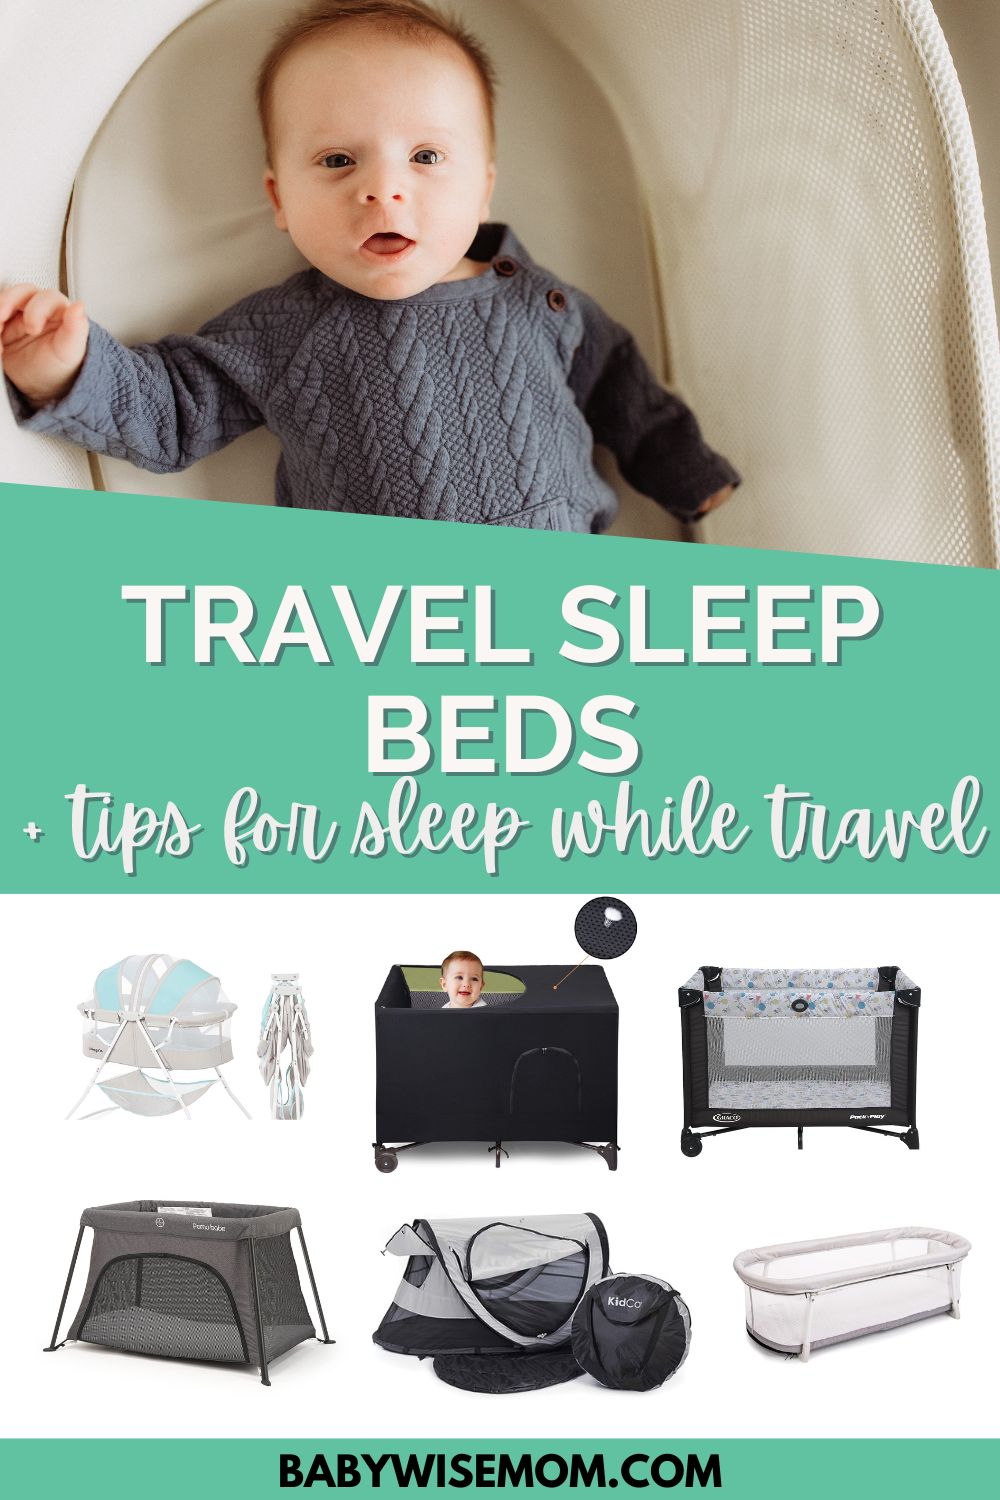 Travel sleep bed pinnable image